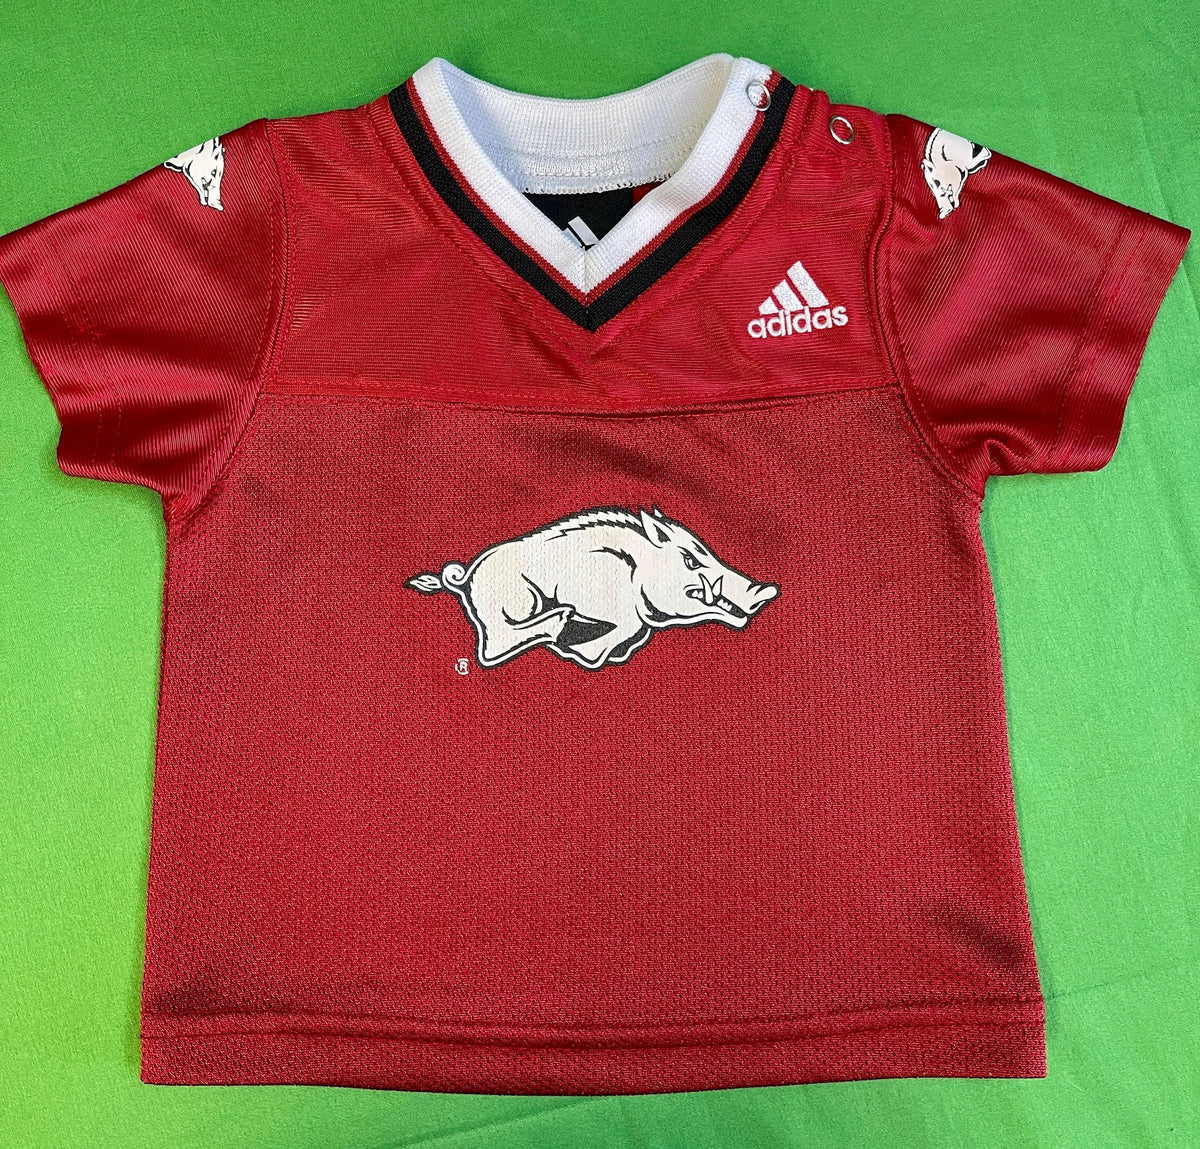 NCAA Arkansas Razorbacks Adidas 2-pc Outfit Baby Infant 6-9 months